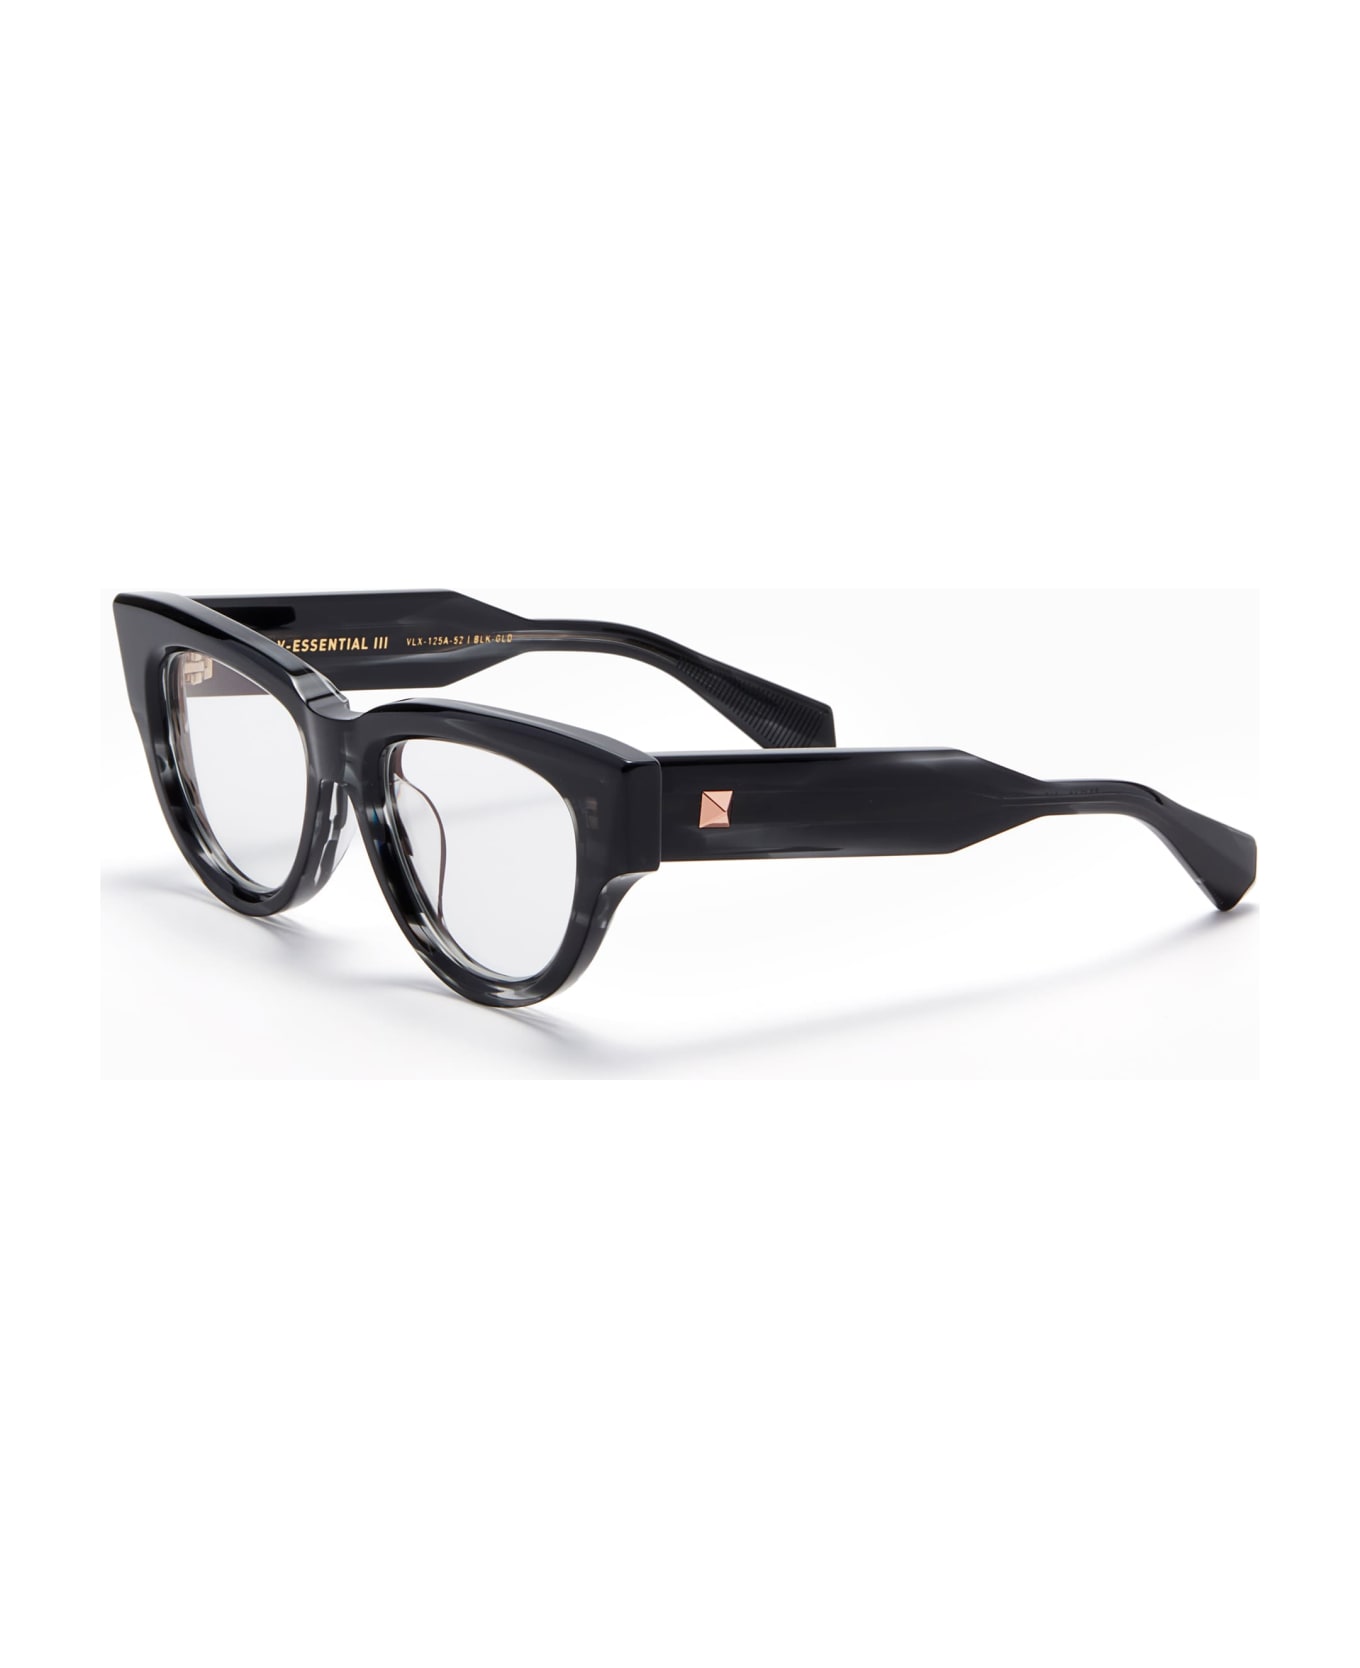 Valentino Eyewear V-essential Iii - Black Swirl Rx Glasses - Black